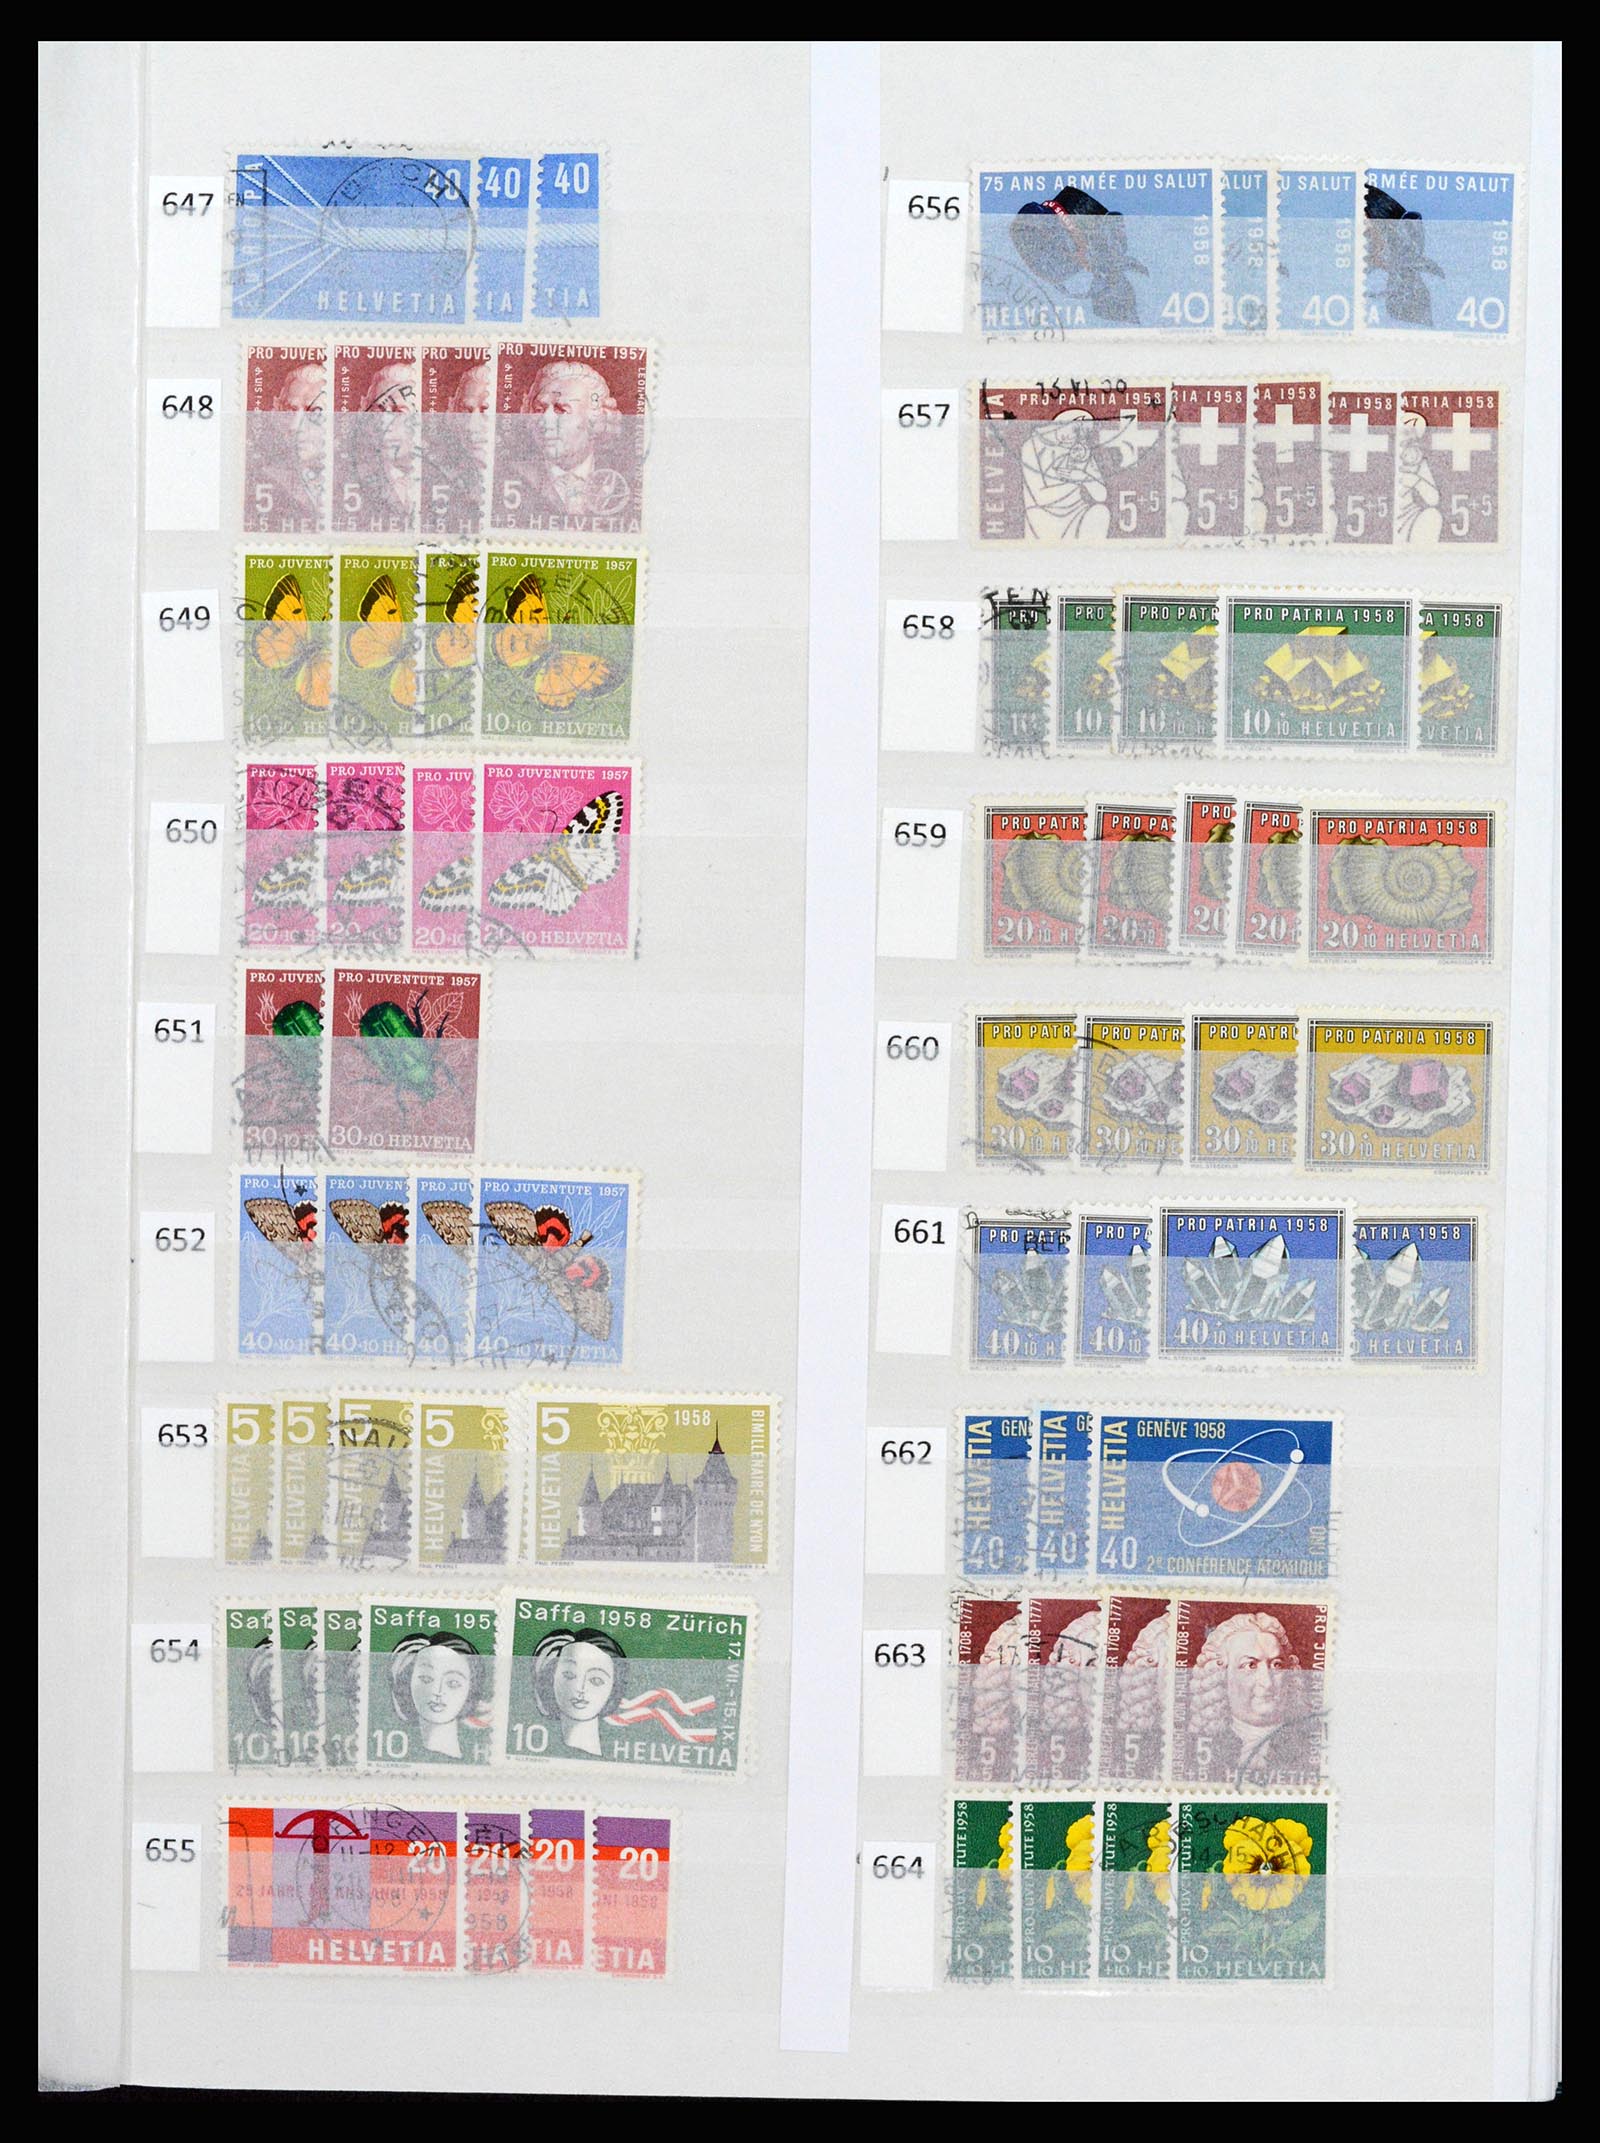 37252 034 - Stamp collection 37252 Switzerland 1900-2011.